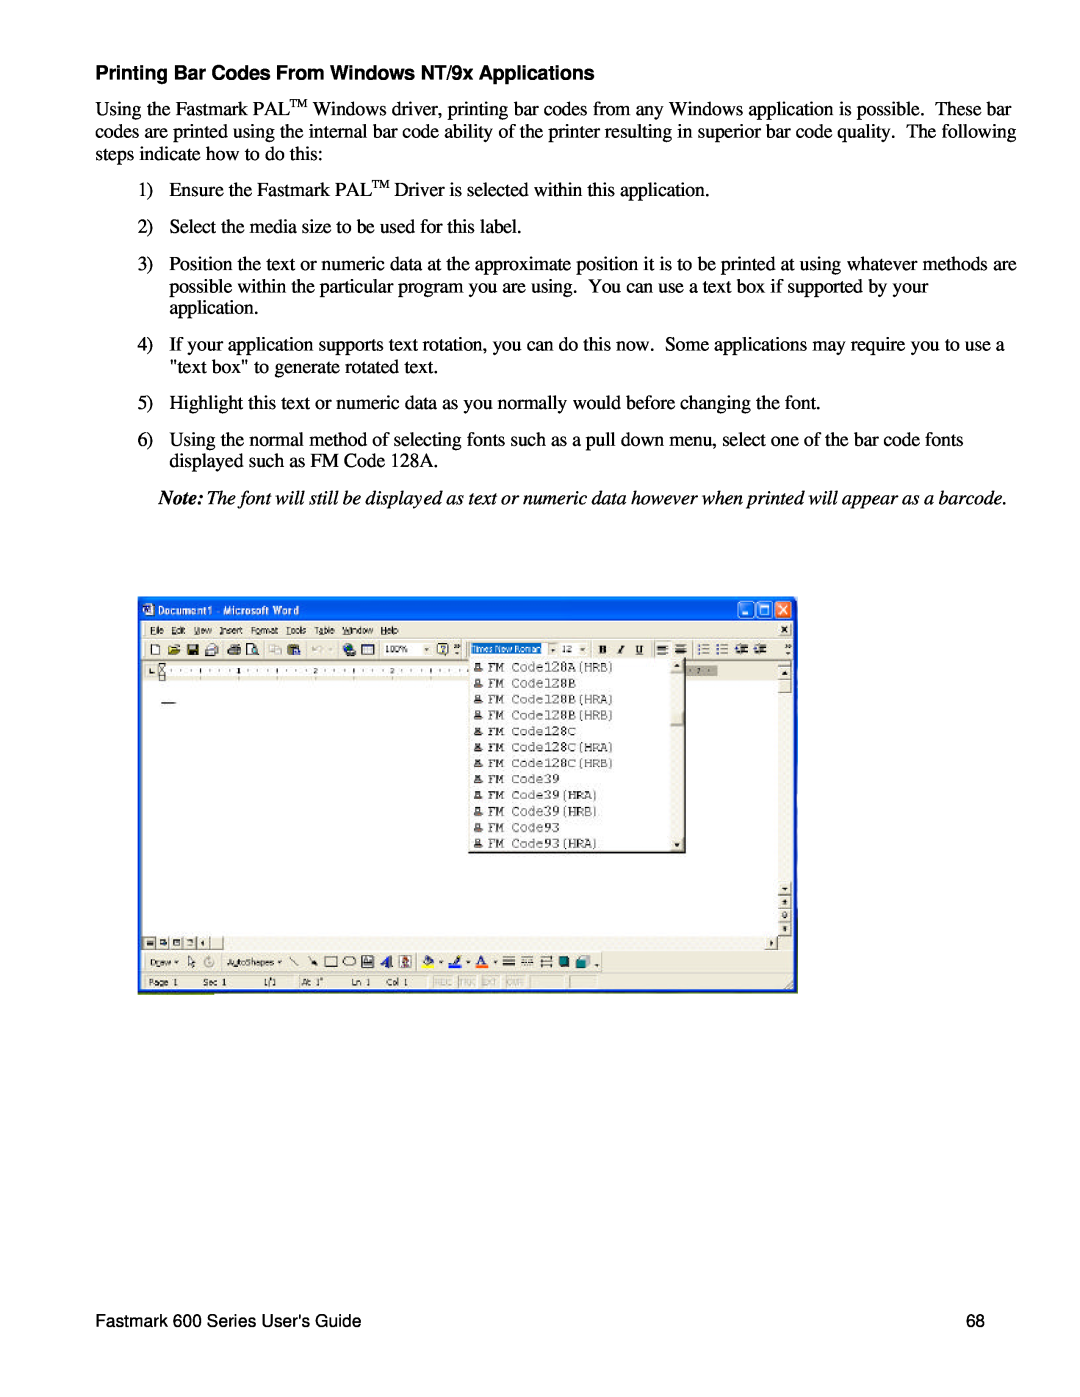 AMT Datasouth 600 manual Printing Bar Codes From Windows NT/9x Applications 